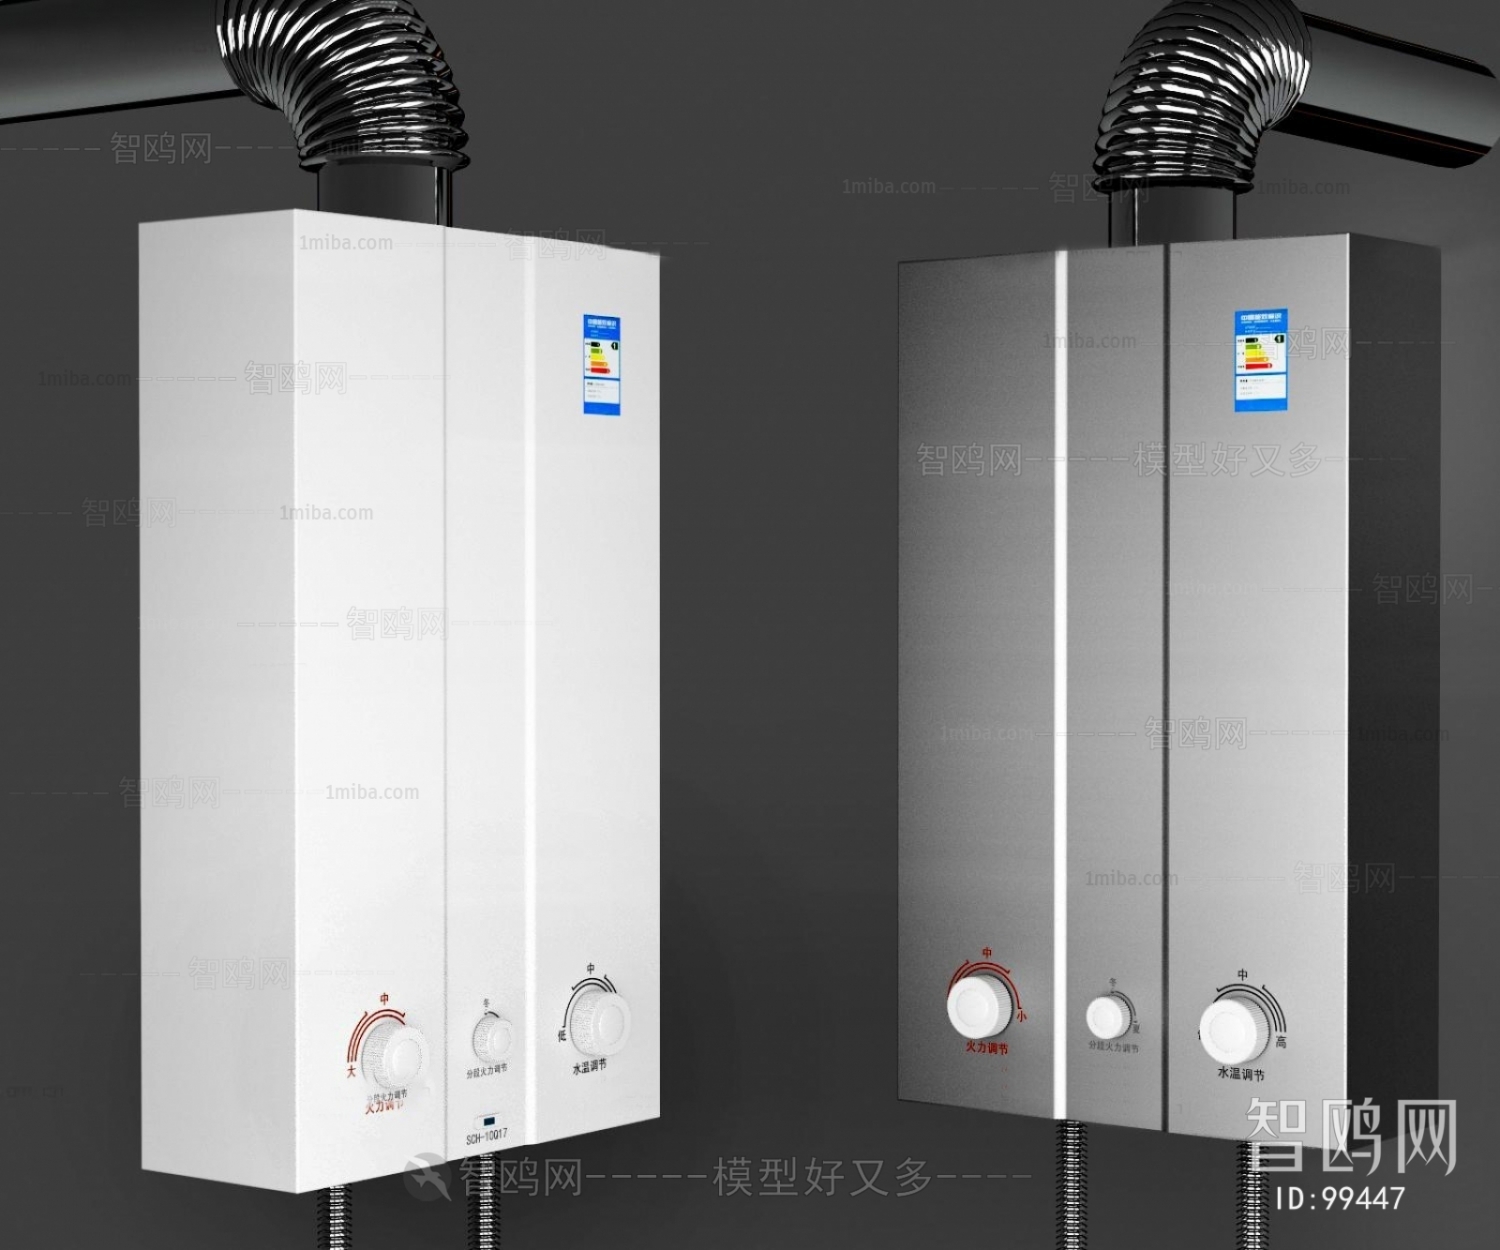 Modern Water Heater